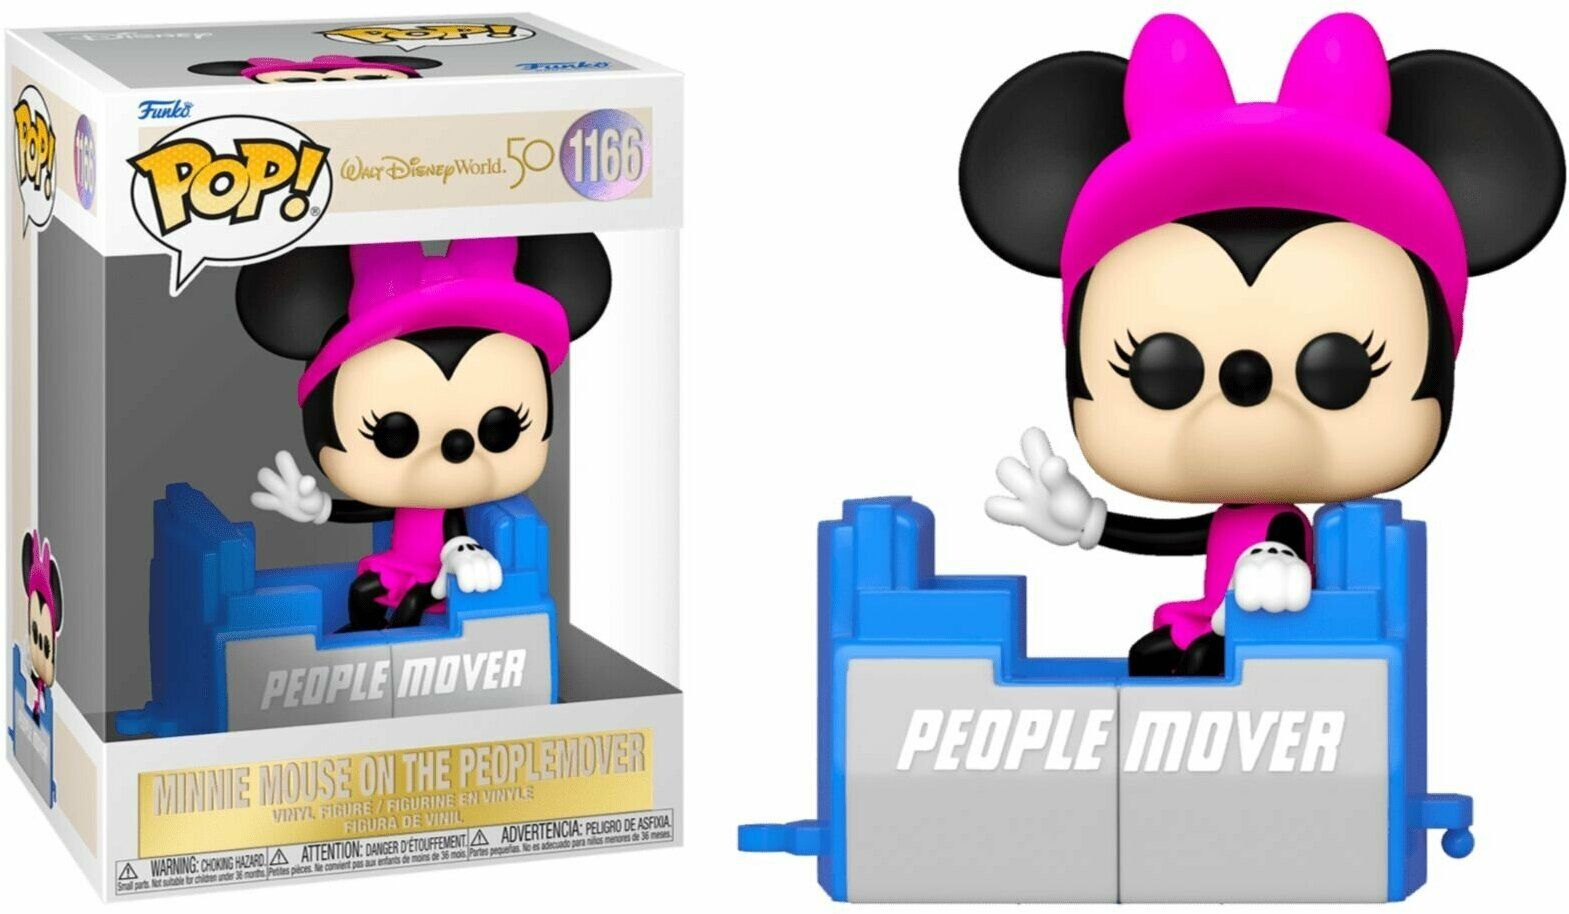 Фигурка Funko POP! Walt Disney World 50th Anniversary: People Mover Minnie фигурка funko pop walt disney world 50th anniversary people mover minnie 59508 10 см